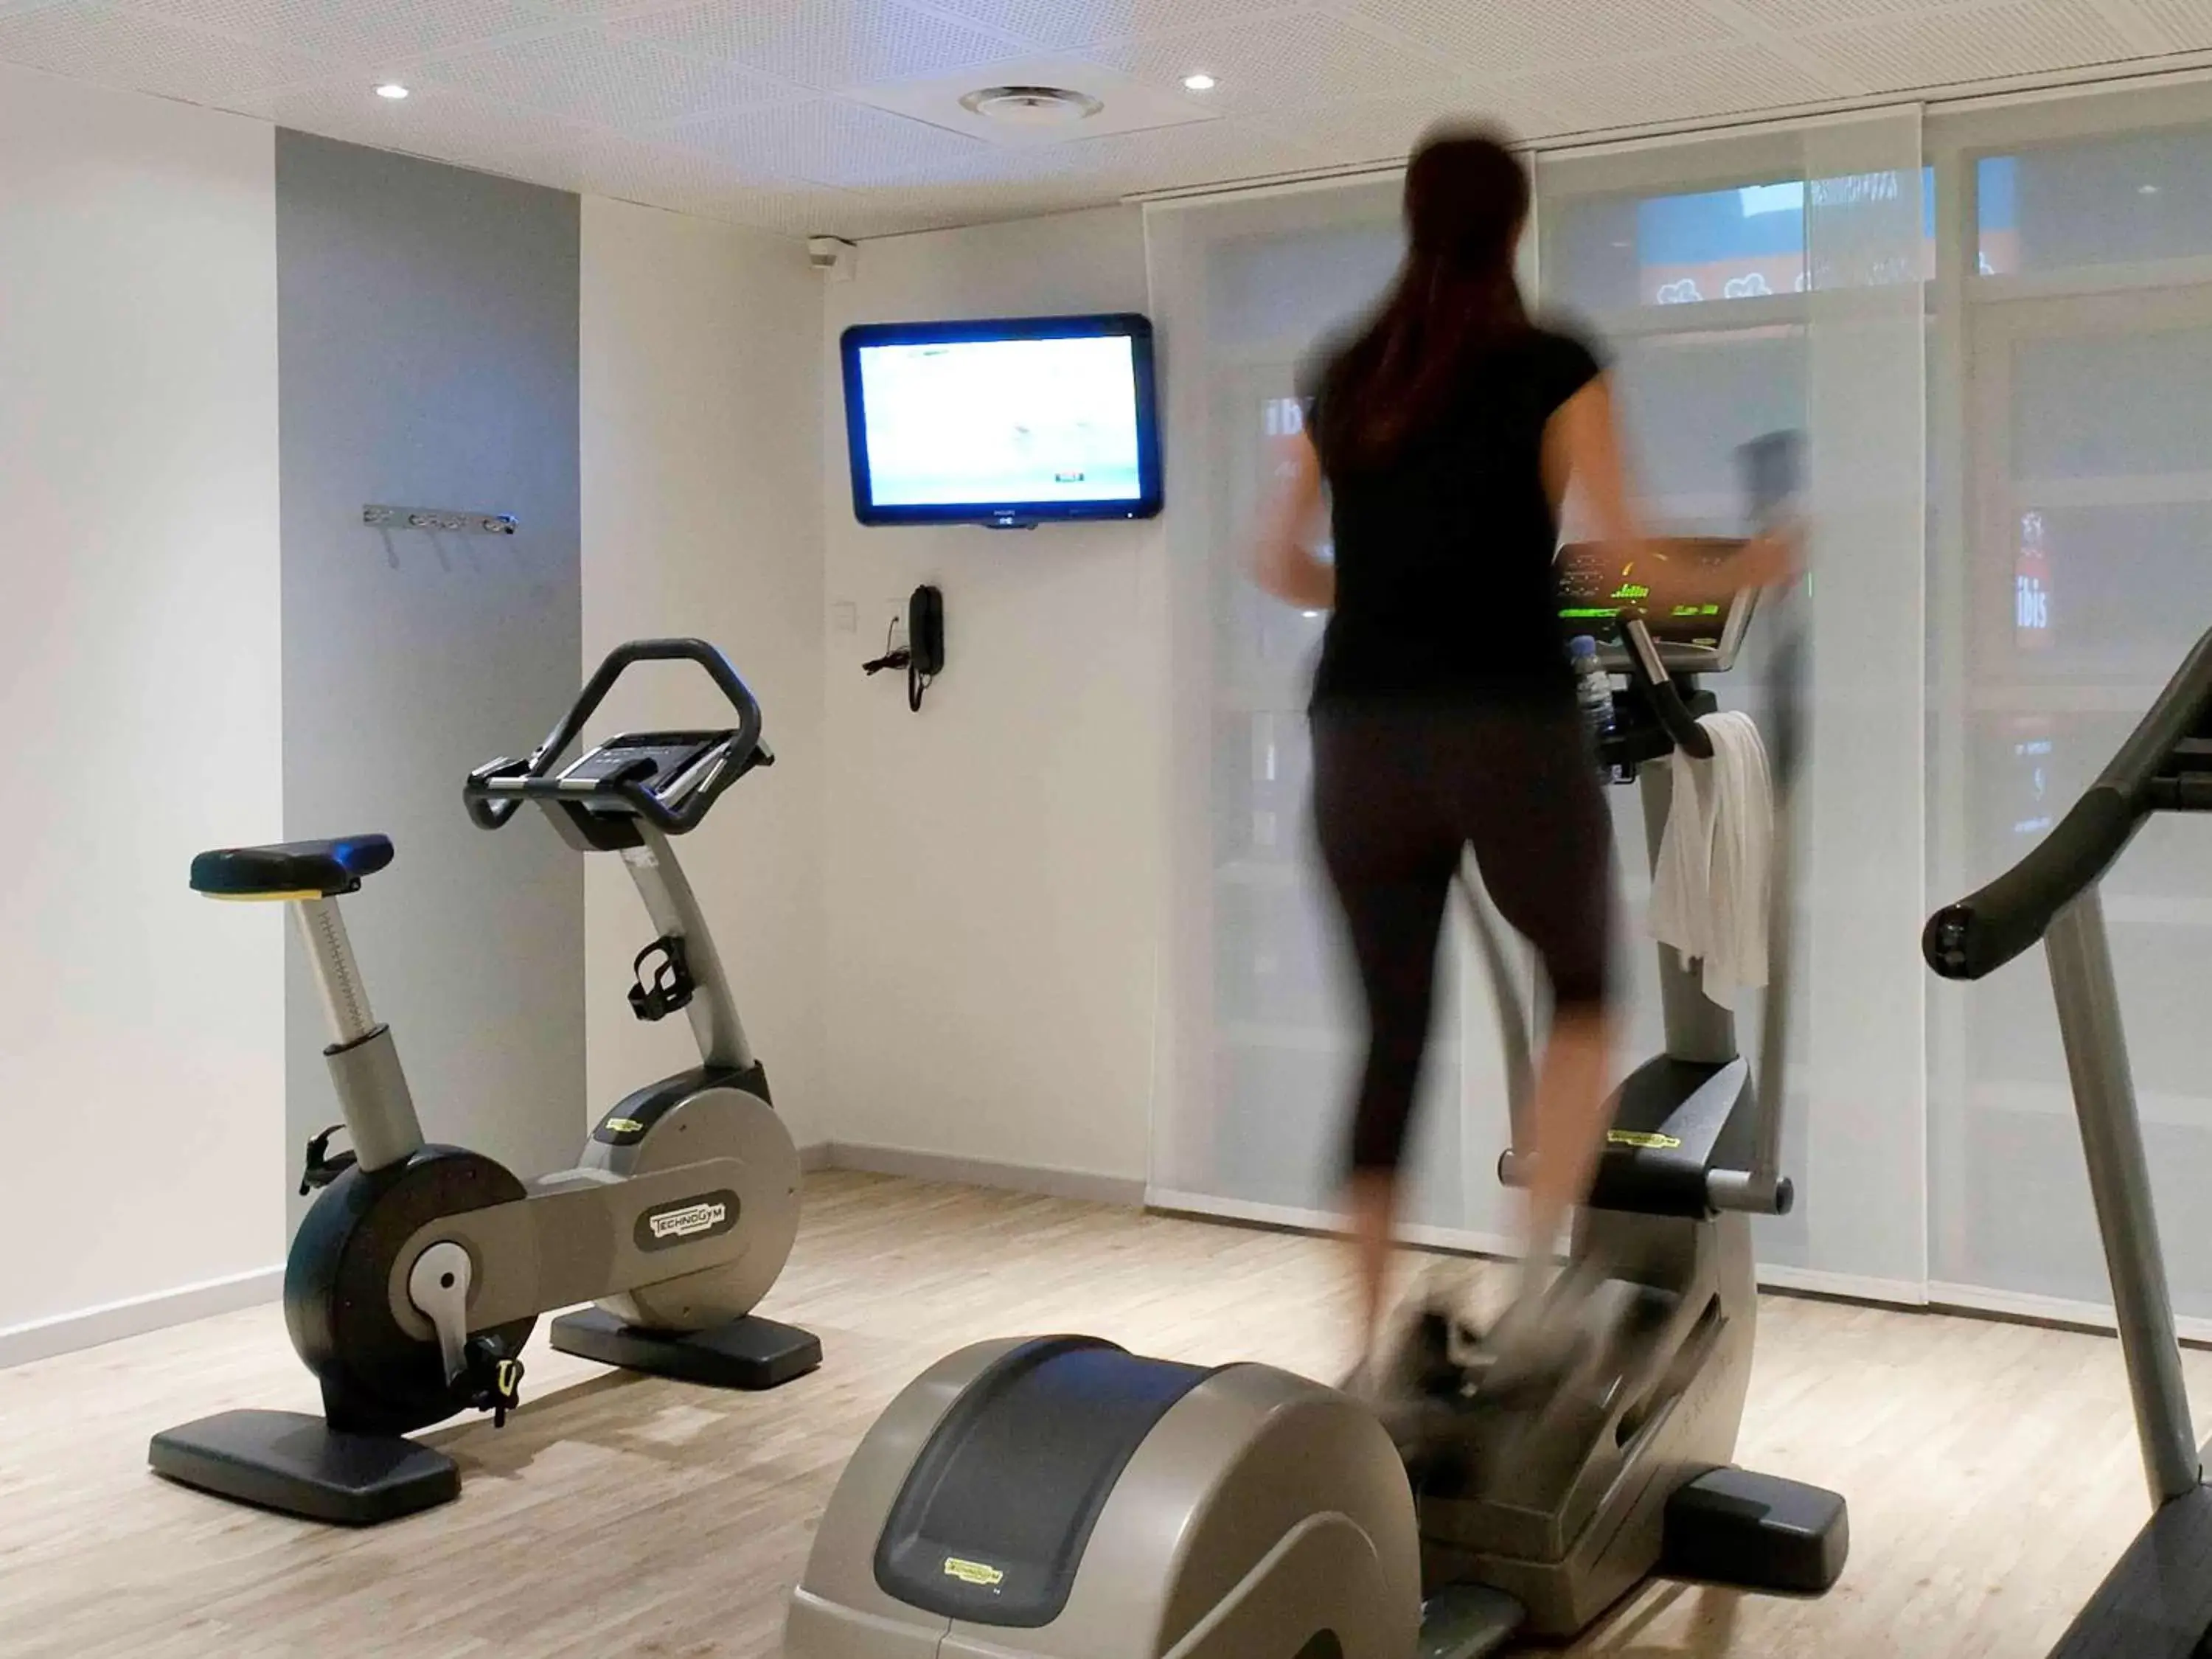 Fitness centre/facilities, Fitness Center/Facilities in Novotel Suites Paris Montreuil Vincennes